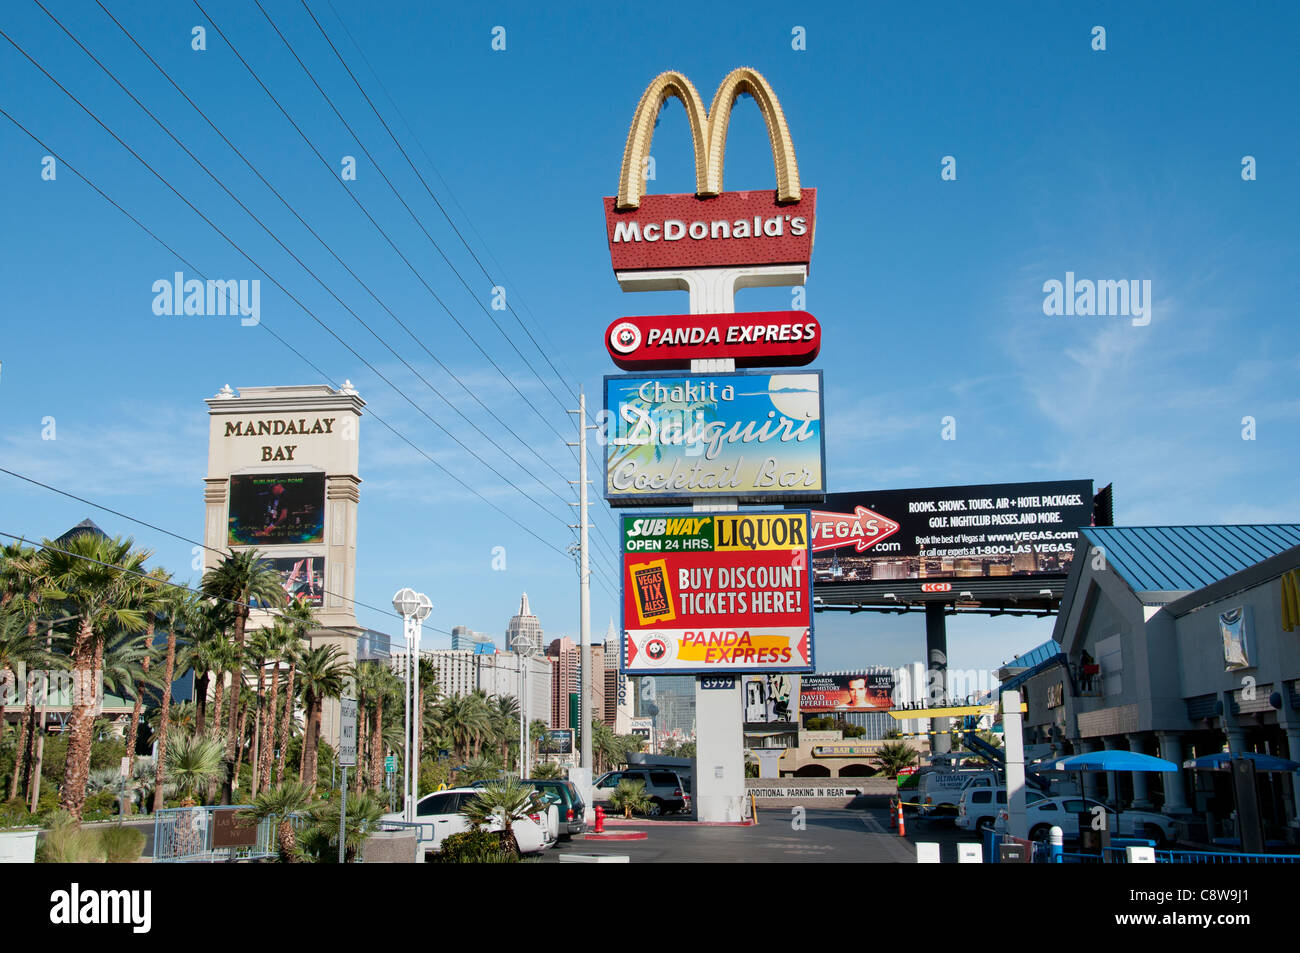 Las Vegas gambling capitale del mondo Stati Uniti Nevada Foto Stock